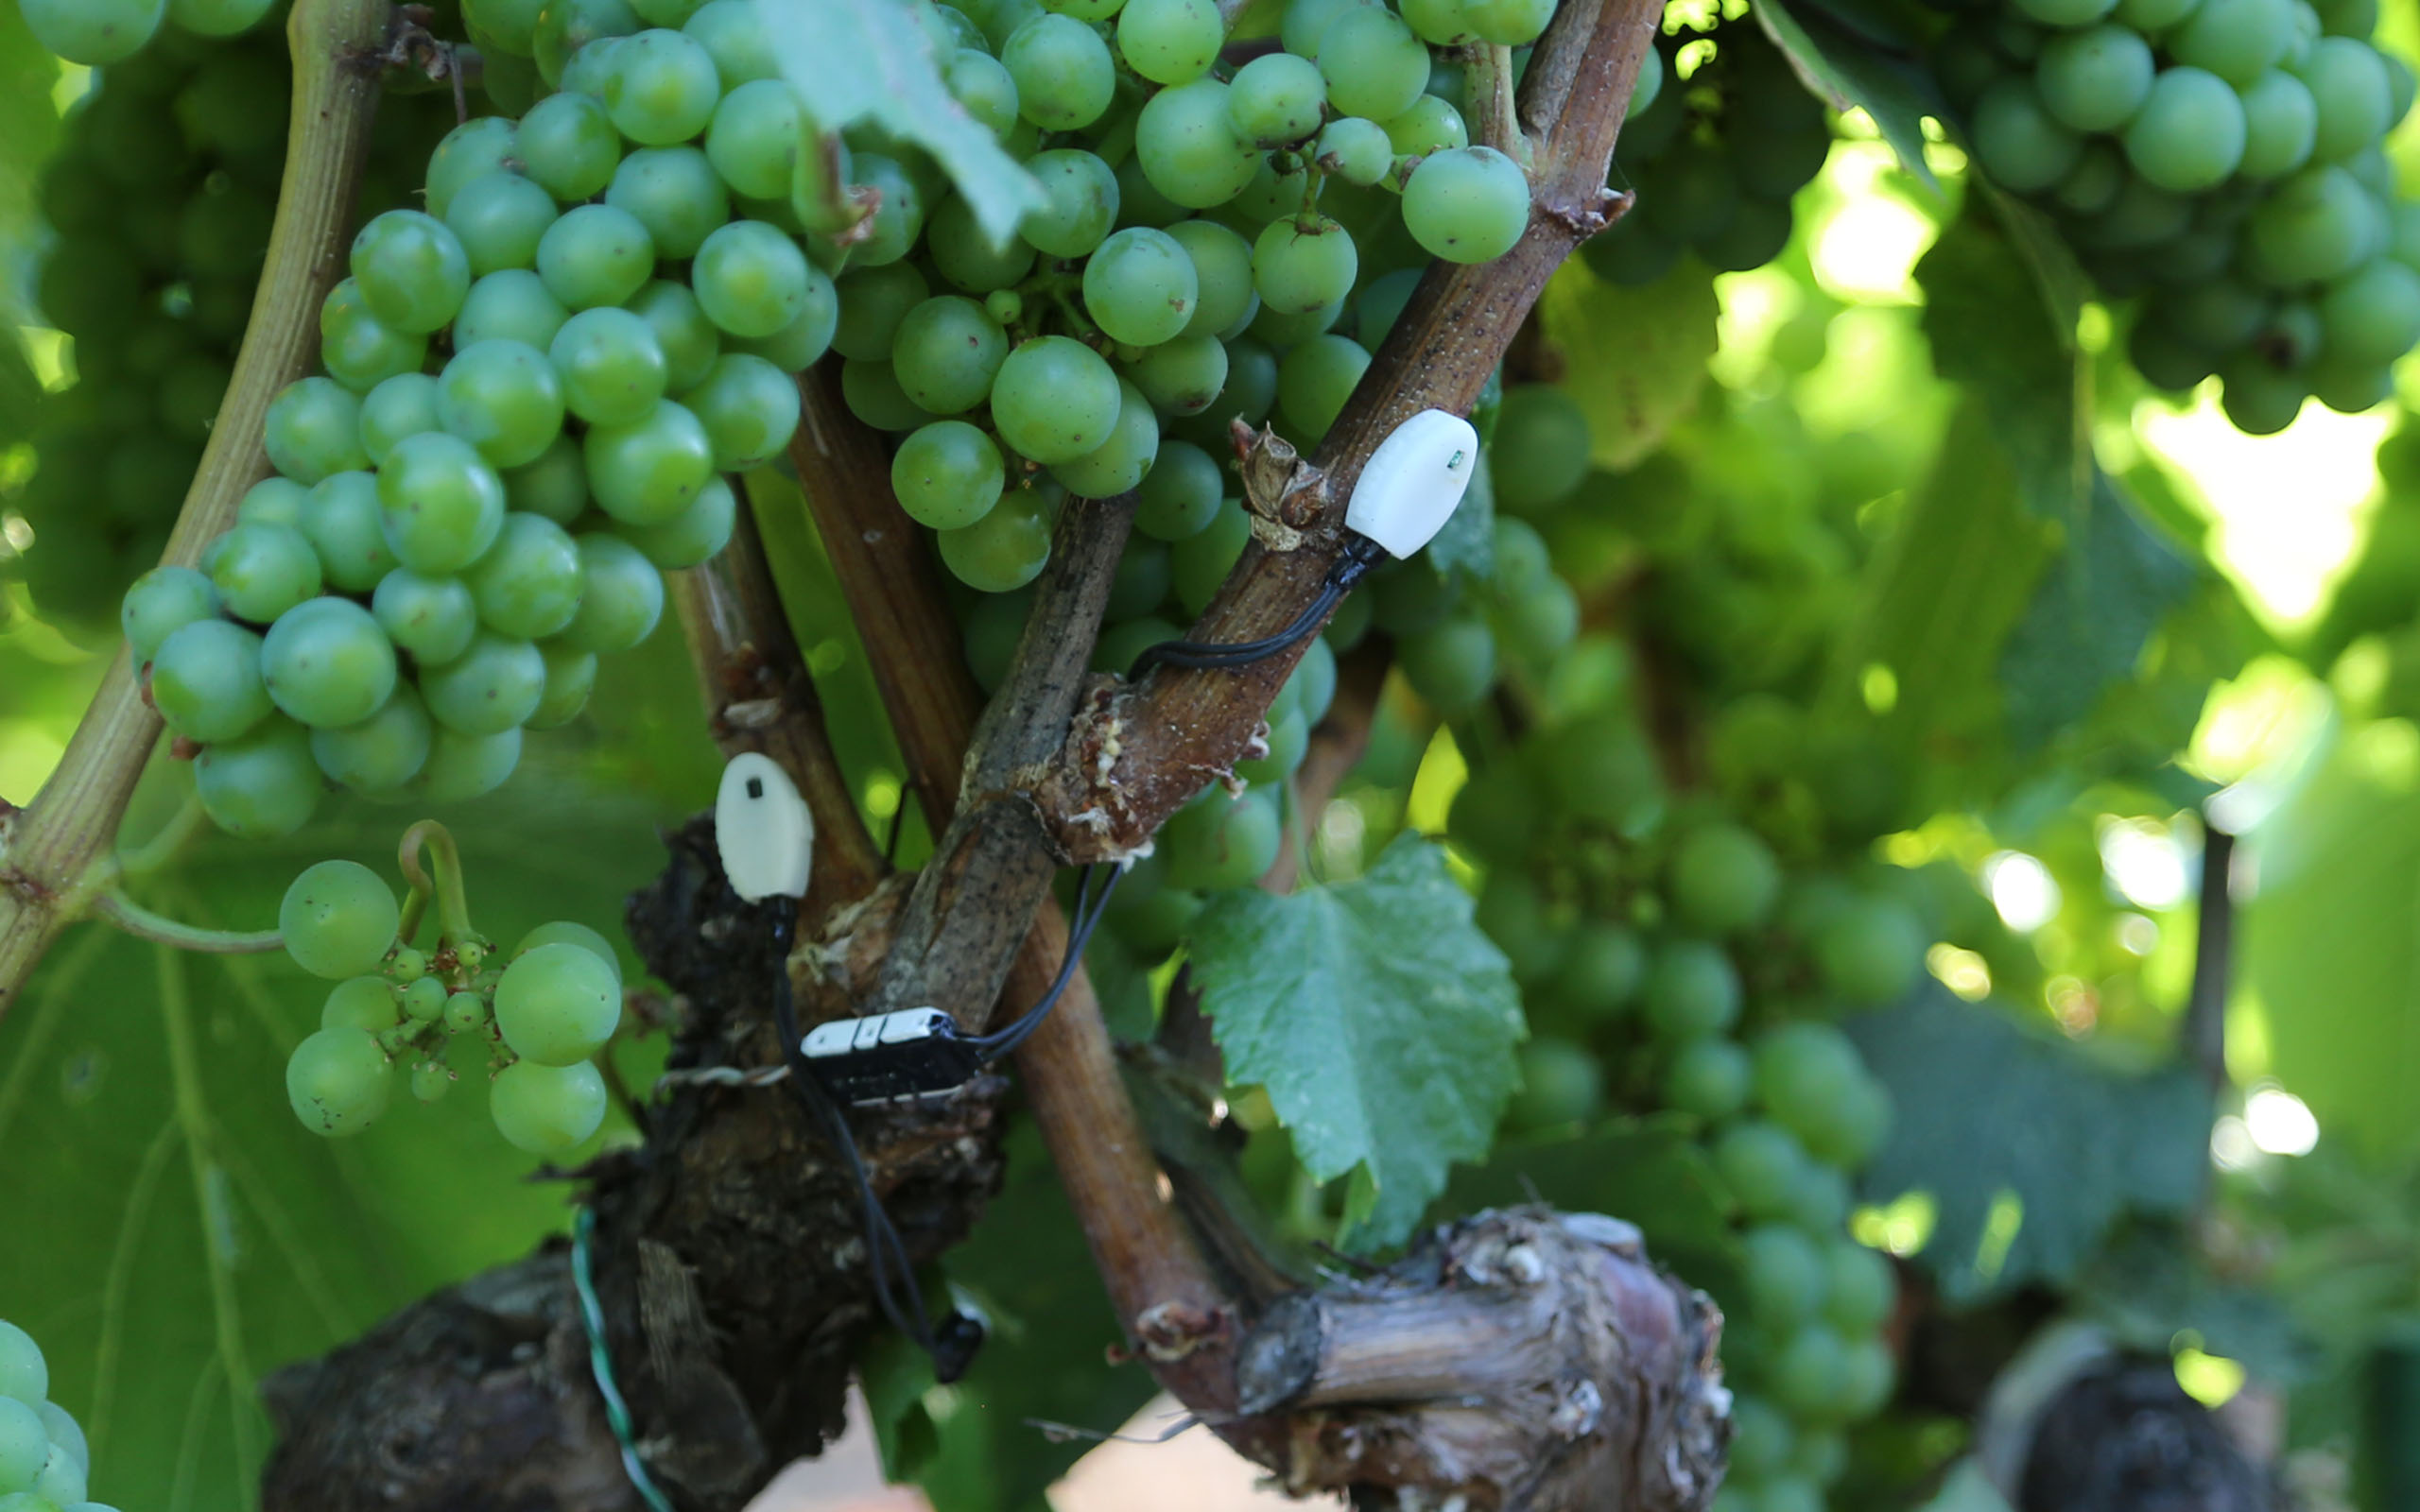 Sap flow probes installed in a grape vine stem